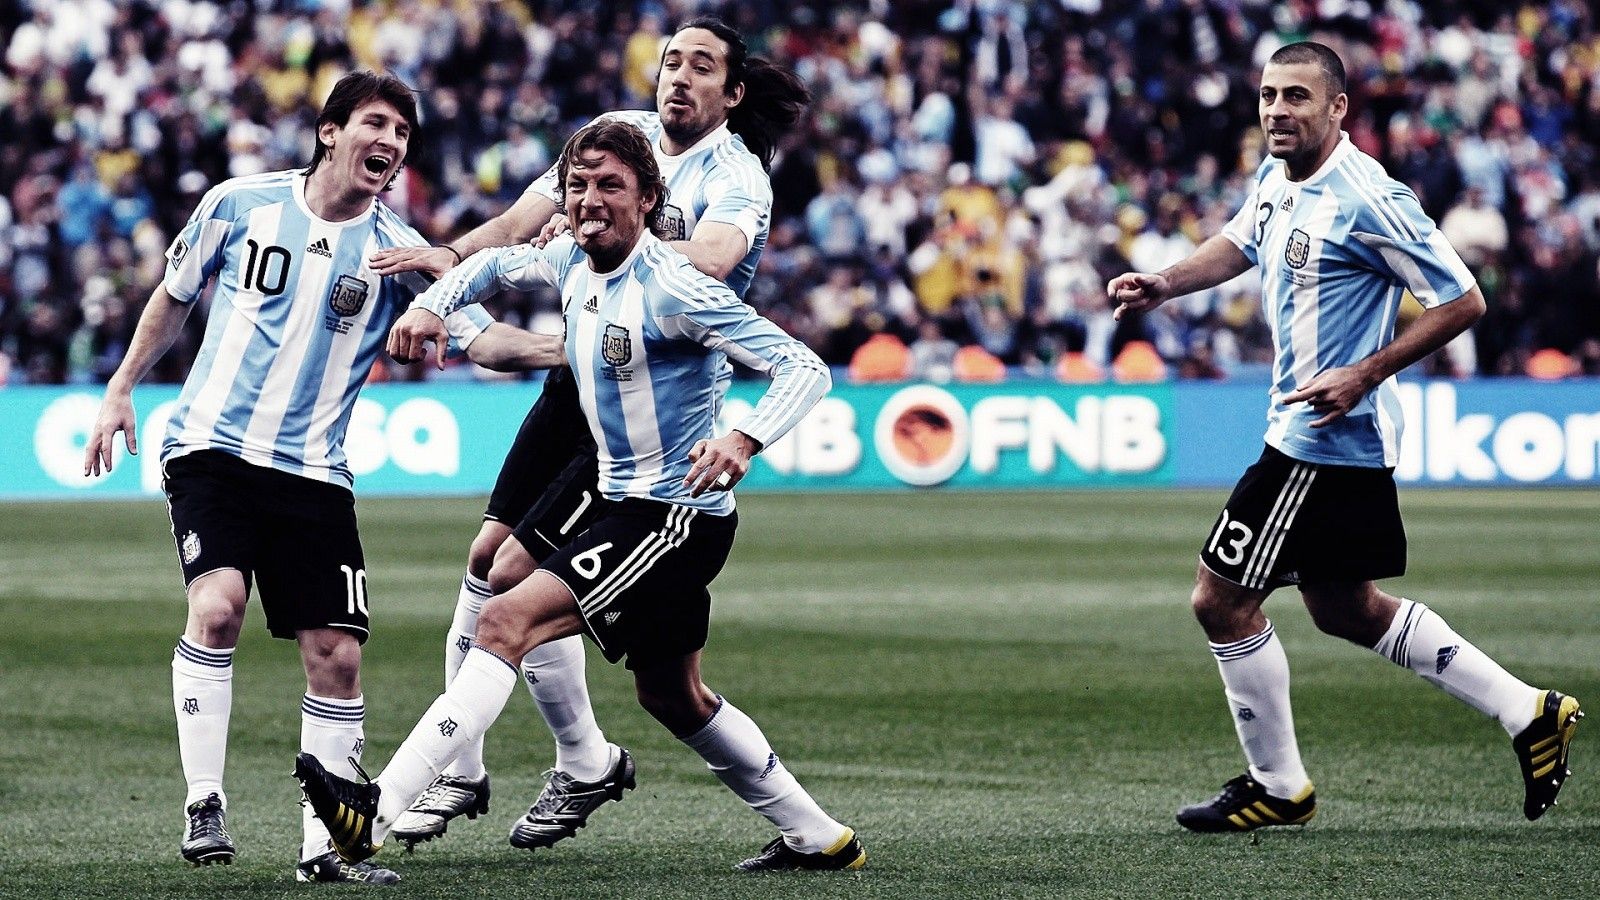 Wallpaper, sports, stadium, ball, Argentina, Lionel Messi, kick, 1600x900 px, football player, sport venue, soccer player, tackle 1600x900